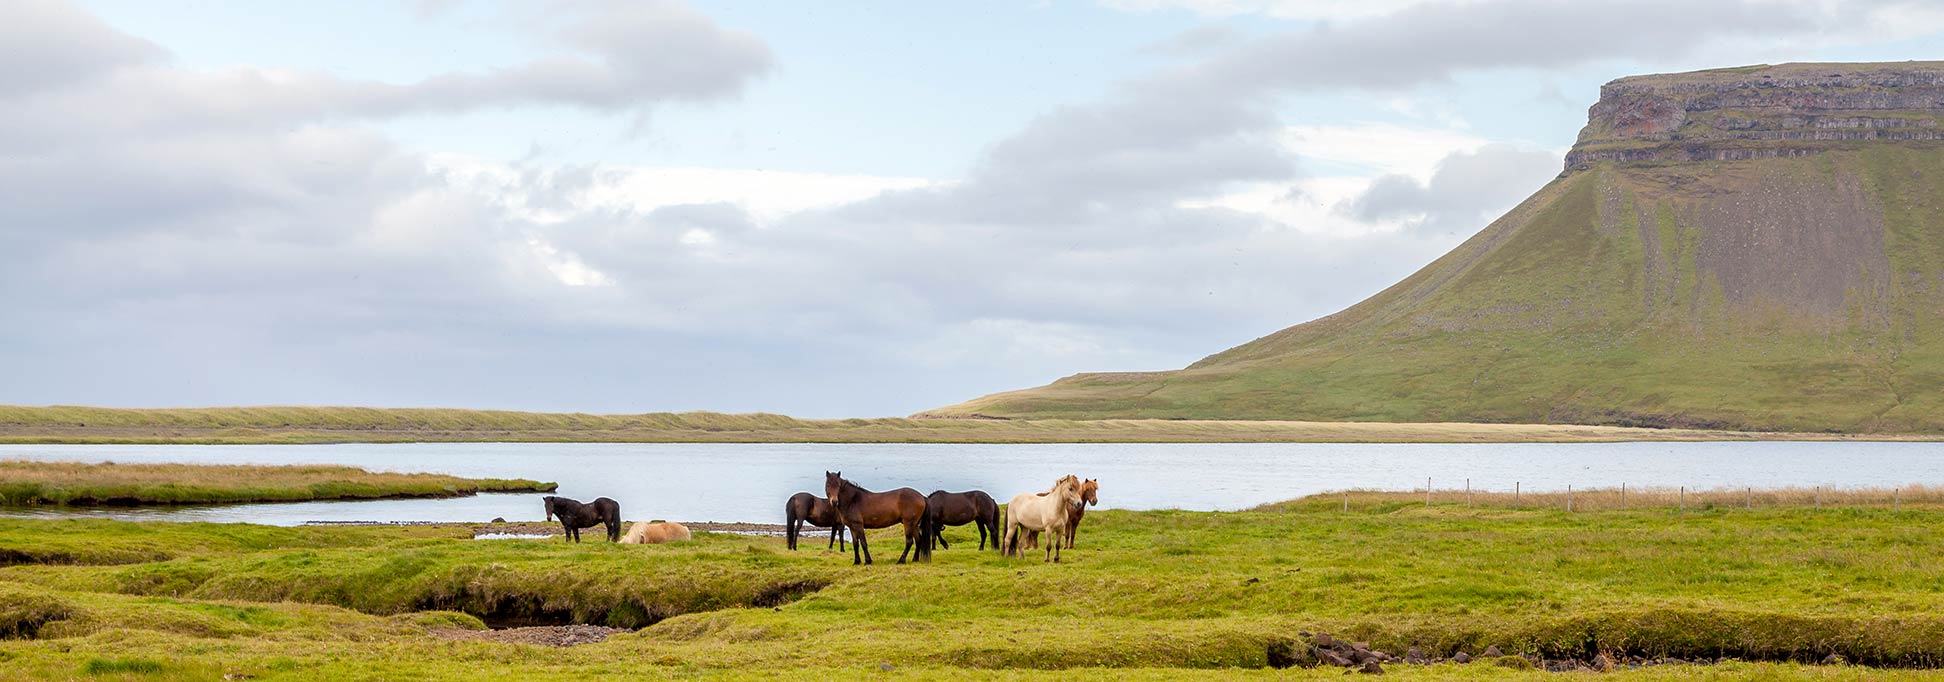 Icelandic horses at Búlandshöfði headland in Vesturland (Western Region) of Iceland